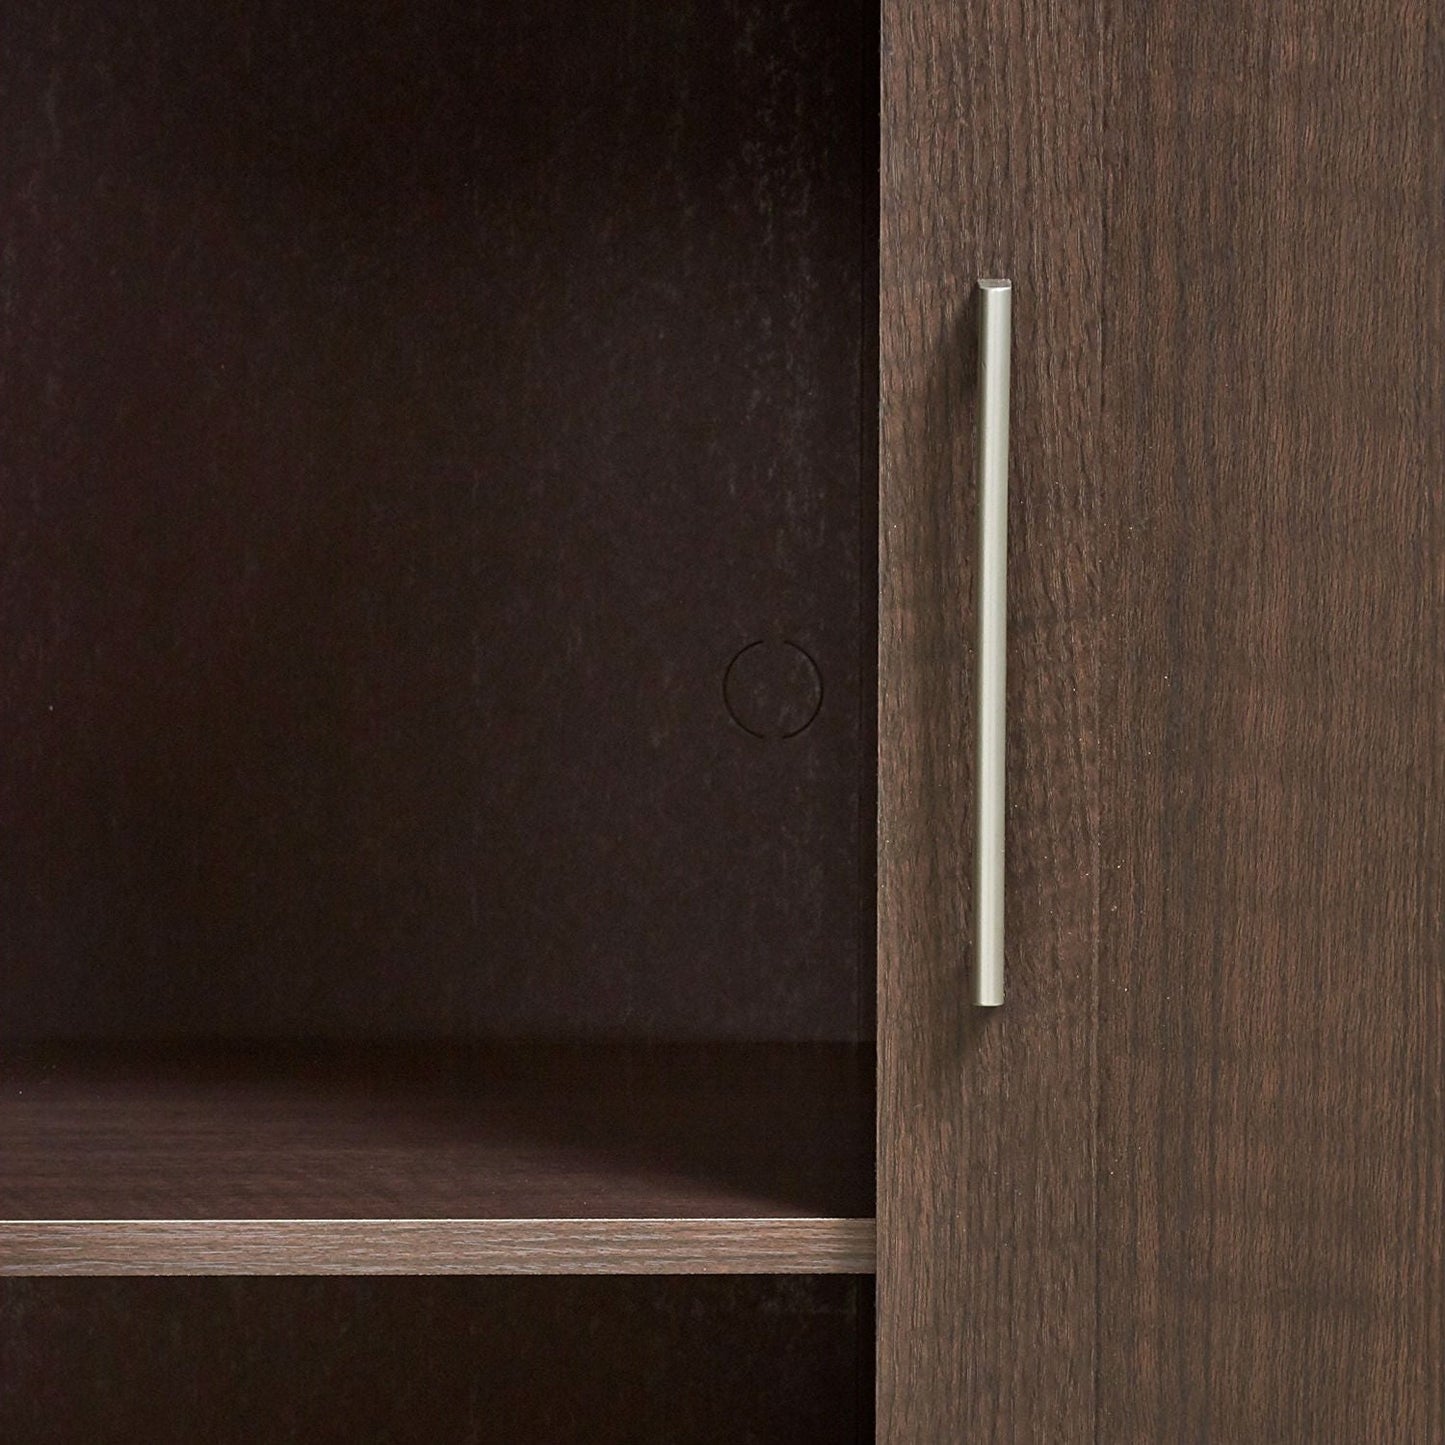 Bedroom > Wardrobe & Armoire - Bedroom Wardrobe Cabinet Storage Closet Organizer In Dark Brown Oak Finish